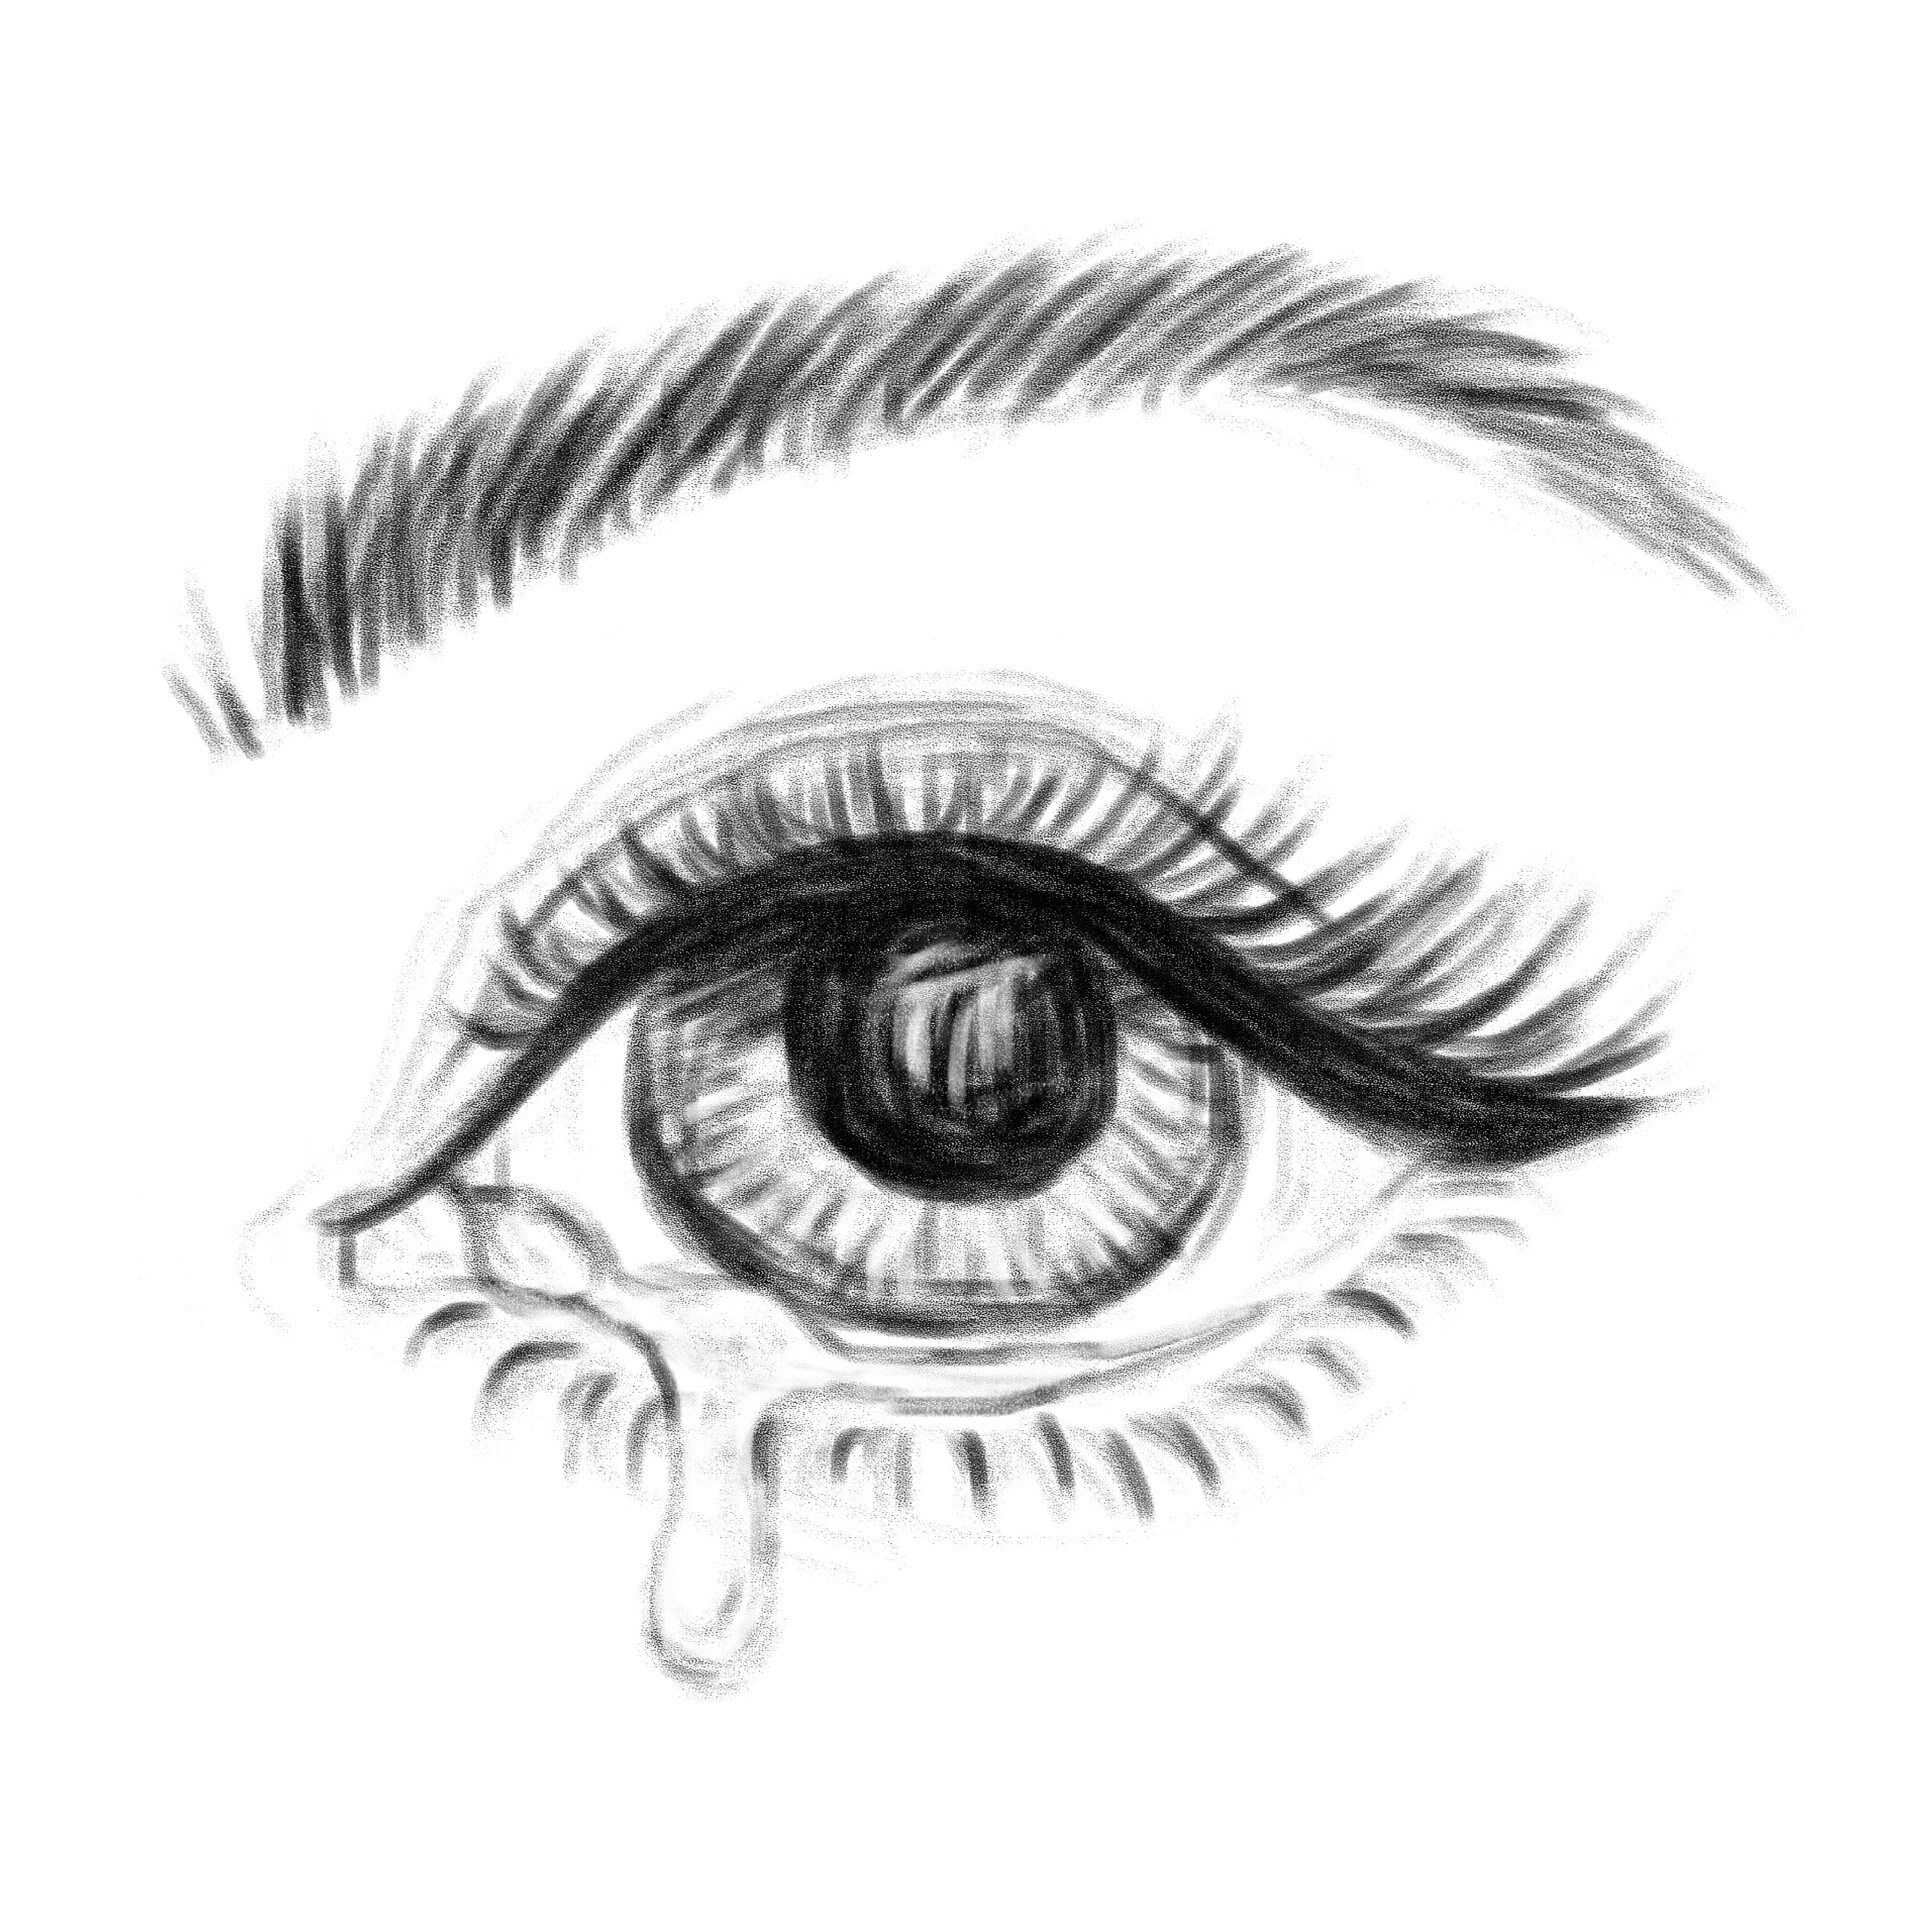 Teary eye | Charcoal drawing, Drawings, Teary eyes